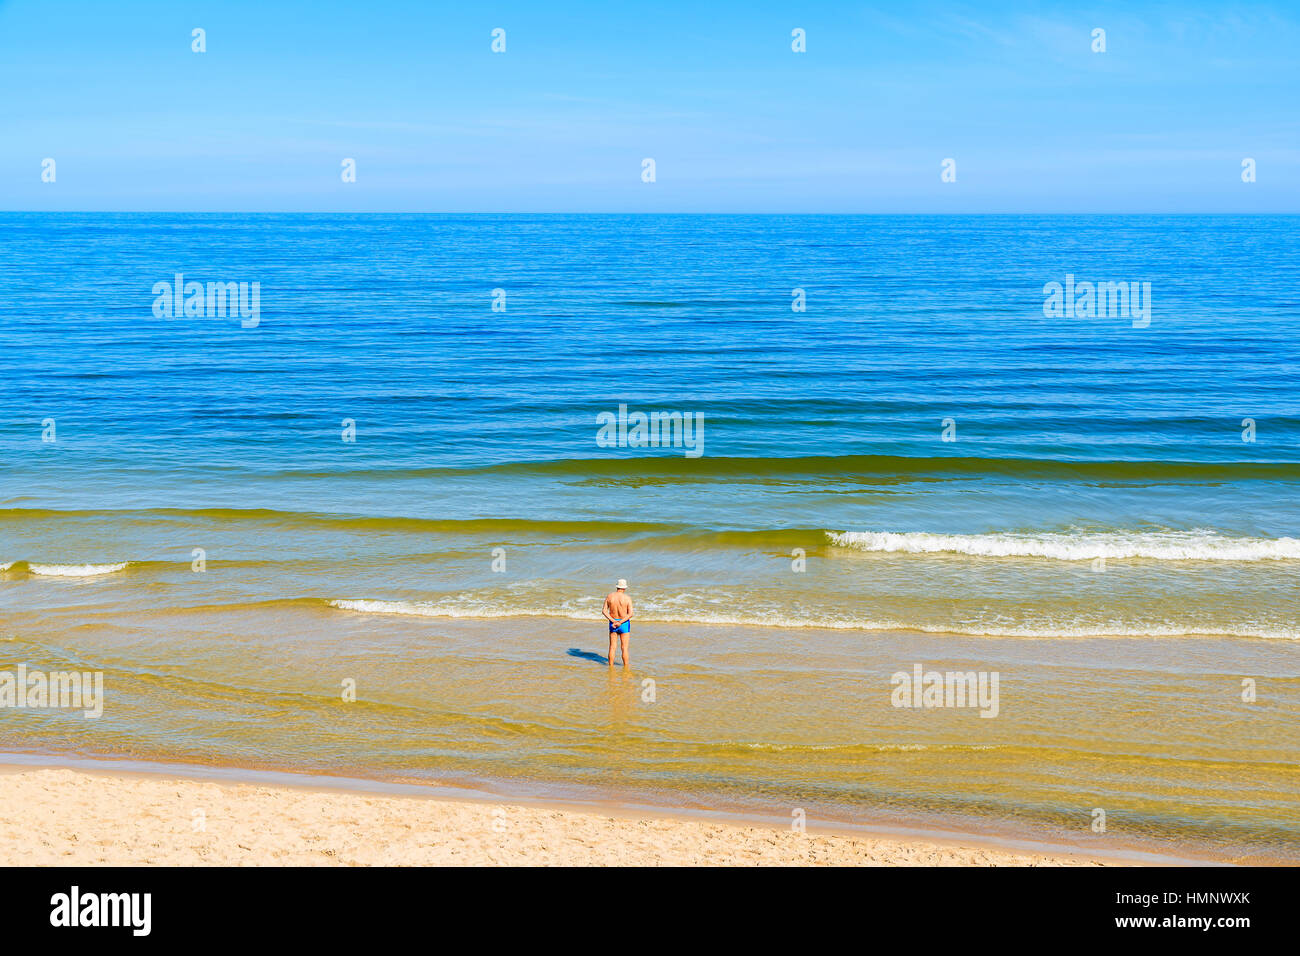 Man standing in water on beach in Jastrzebia Gora, Baltic Sea, Poland Stock Photo